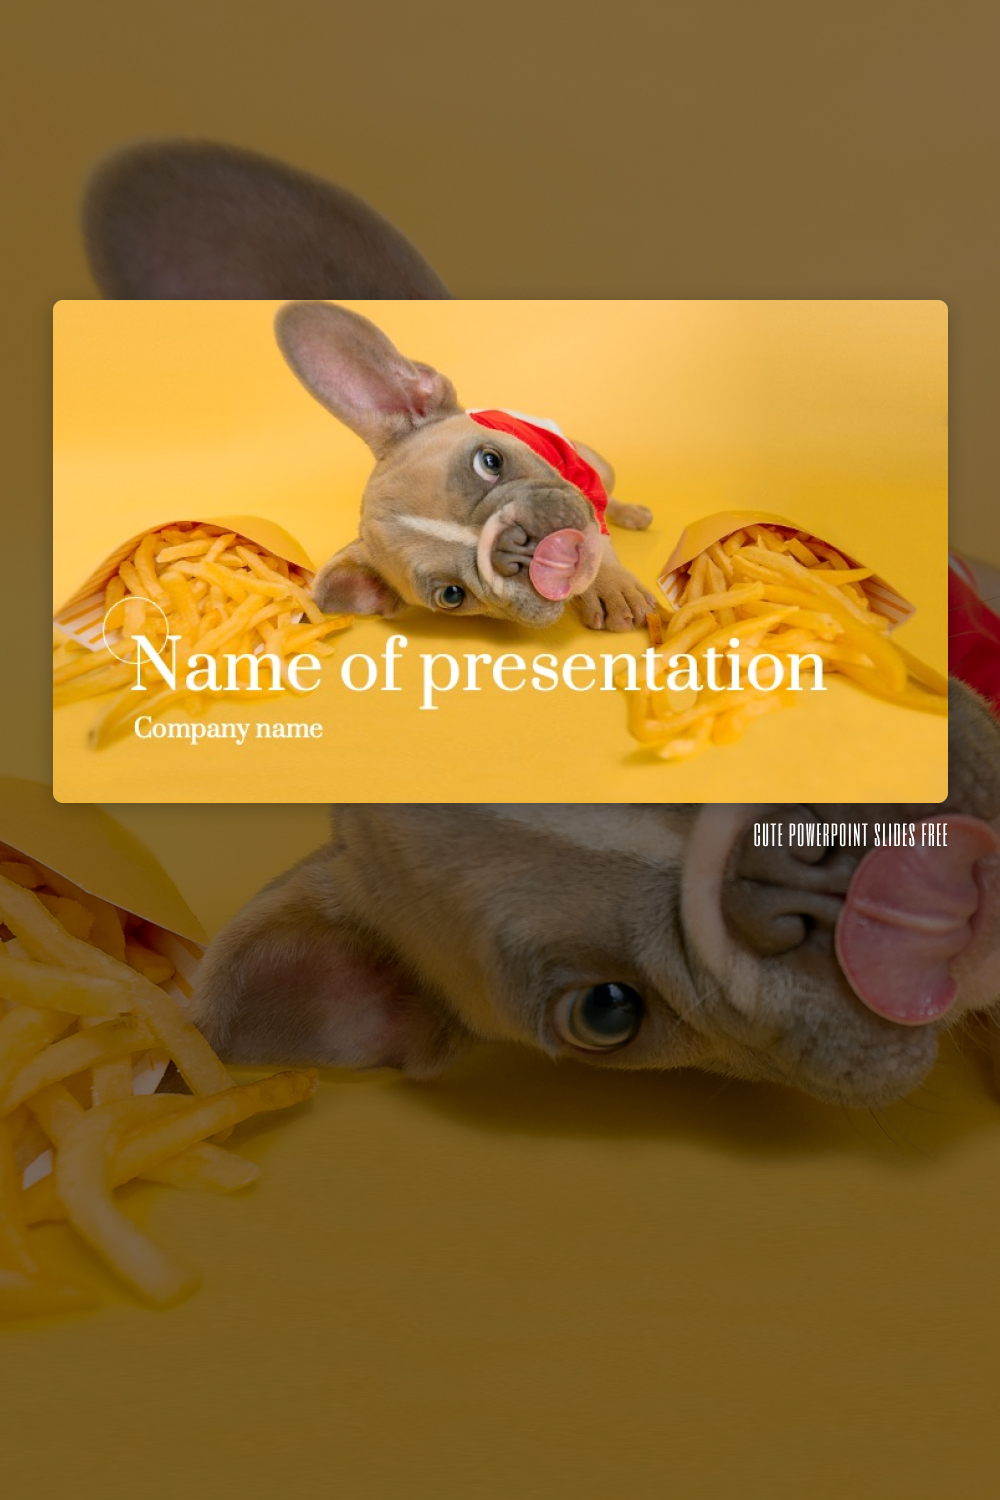 Cute powerpoint slides of pinterest.